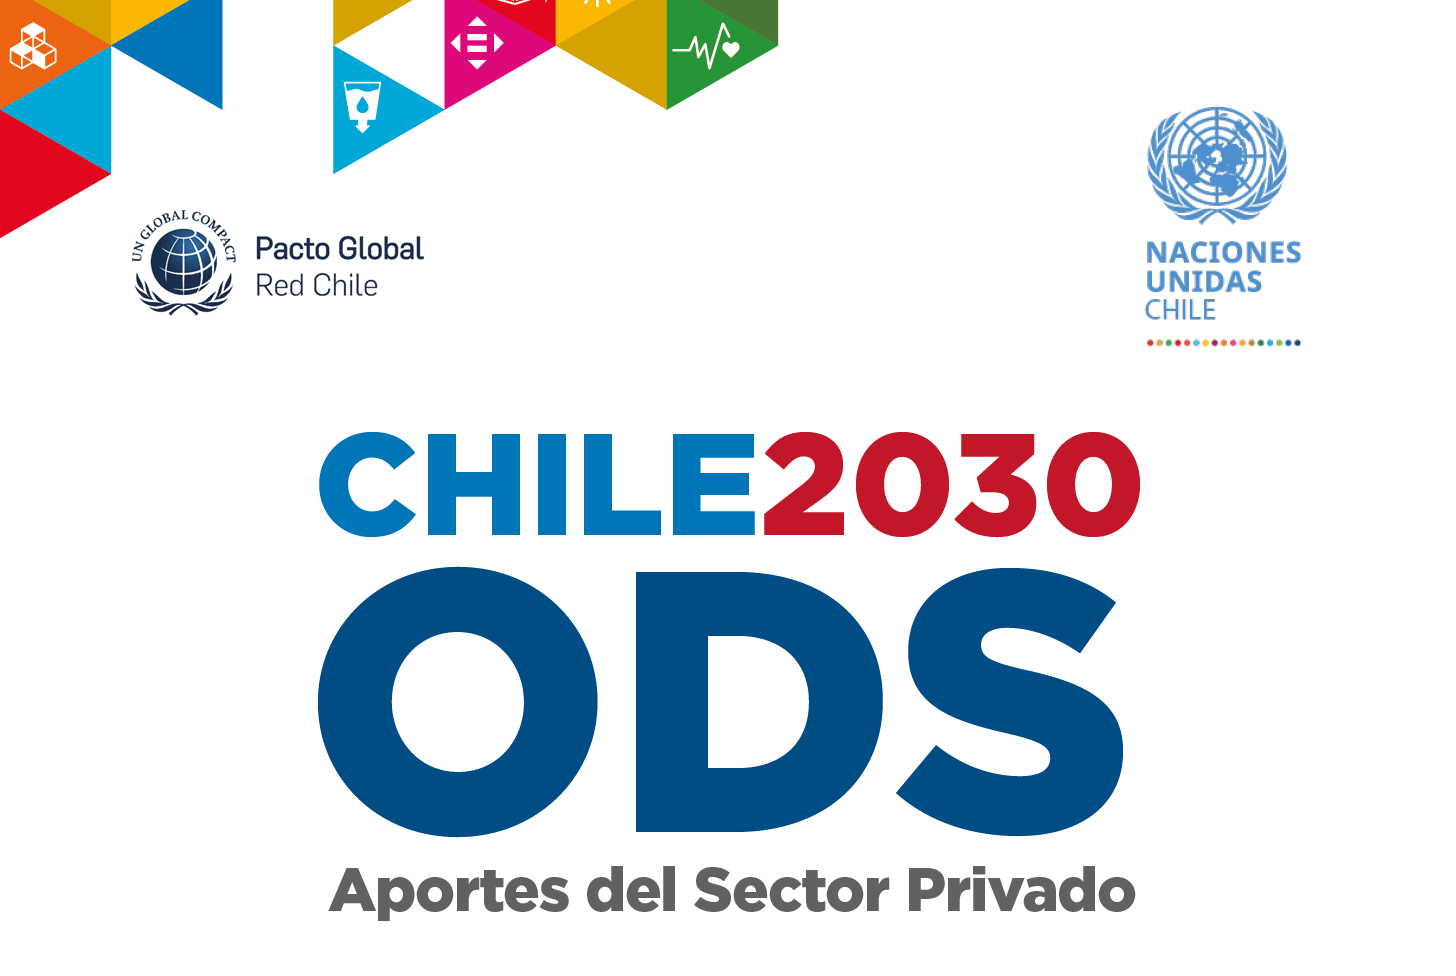 Chile_2030jpg.jpg